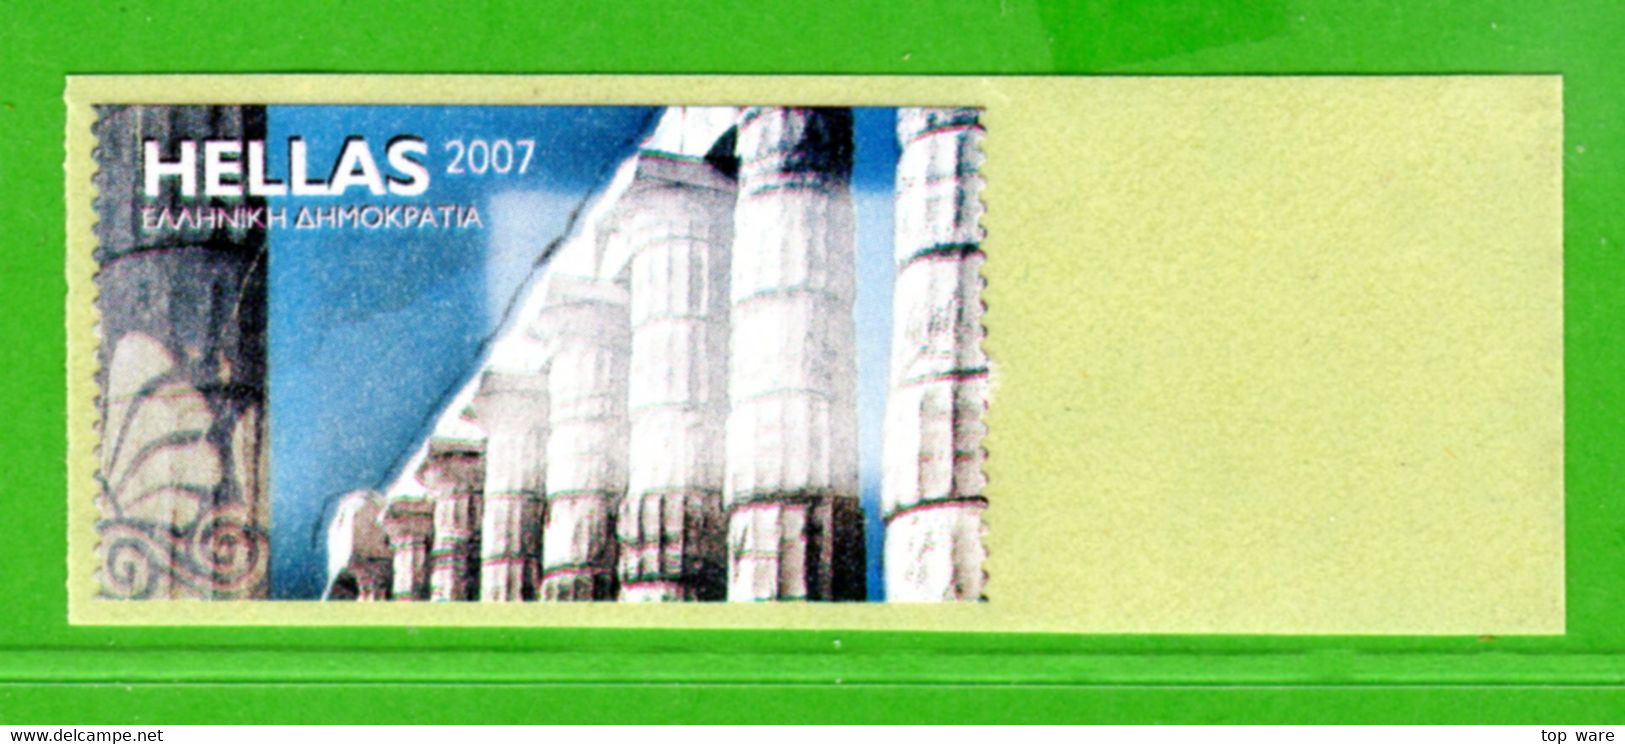 Greece Griechenland HELLAS ATM 23 Temple Colums * Blank Label * Frama Etiquetas Automatenmarken Primtec HERMES - Viñetas De Franqueo [ATM]